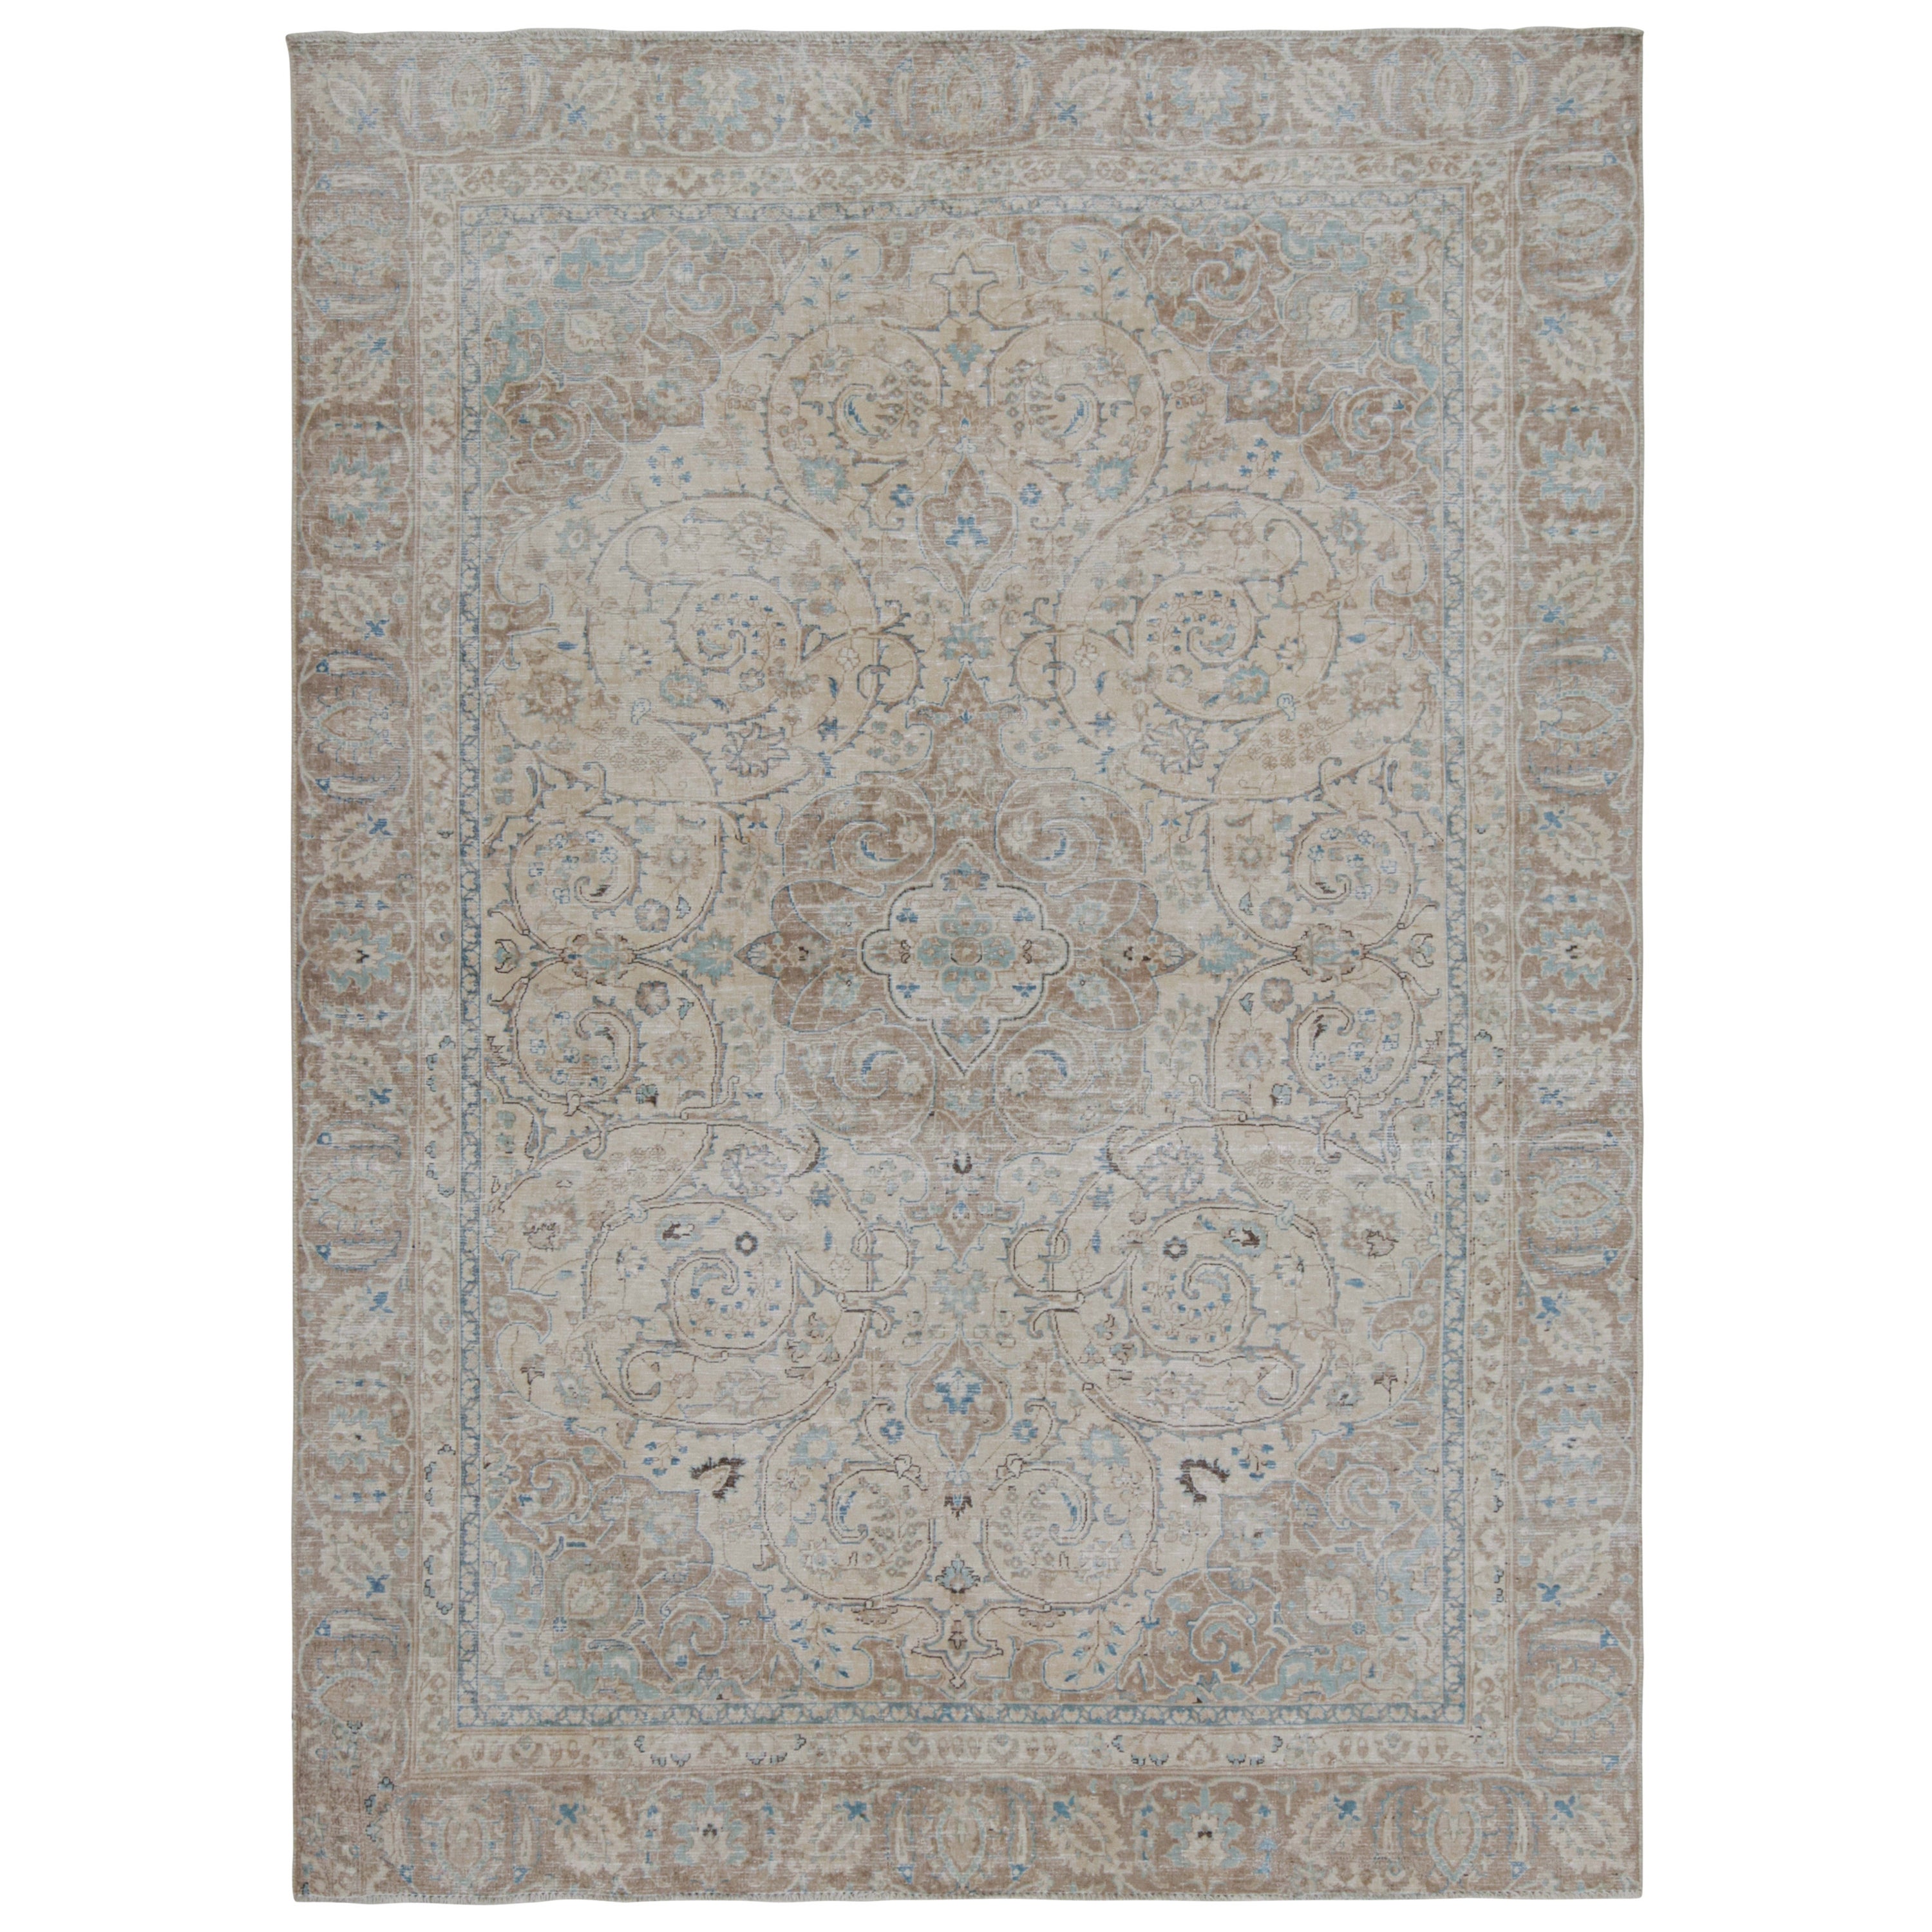 Vintage Tabriz rug in Beige, Brown and Blue Floral Patterns by Rug & Kilim